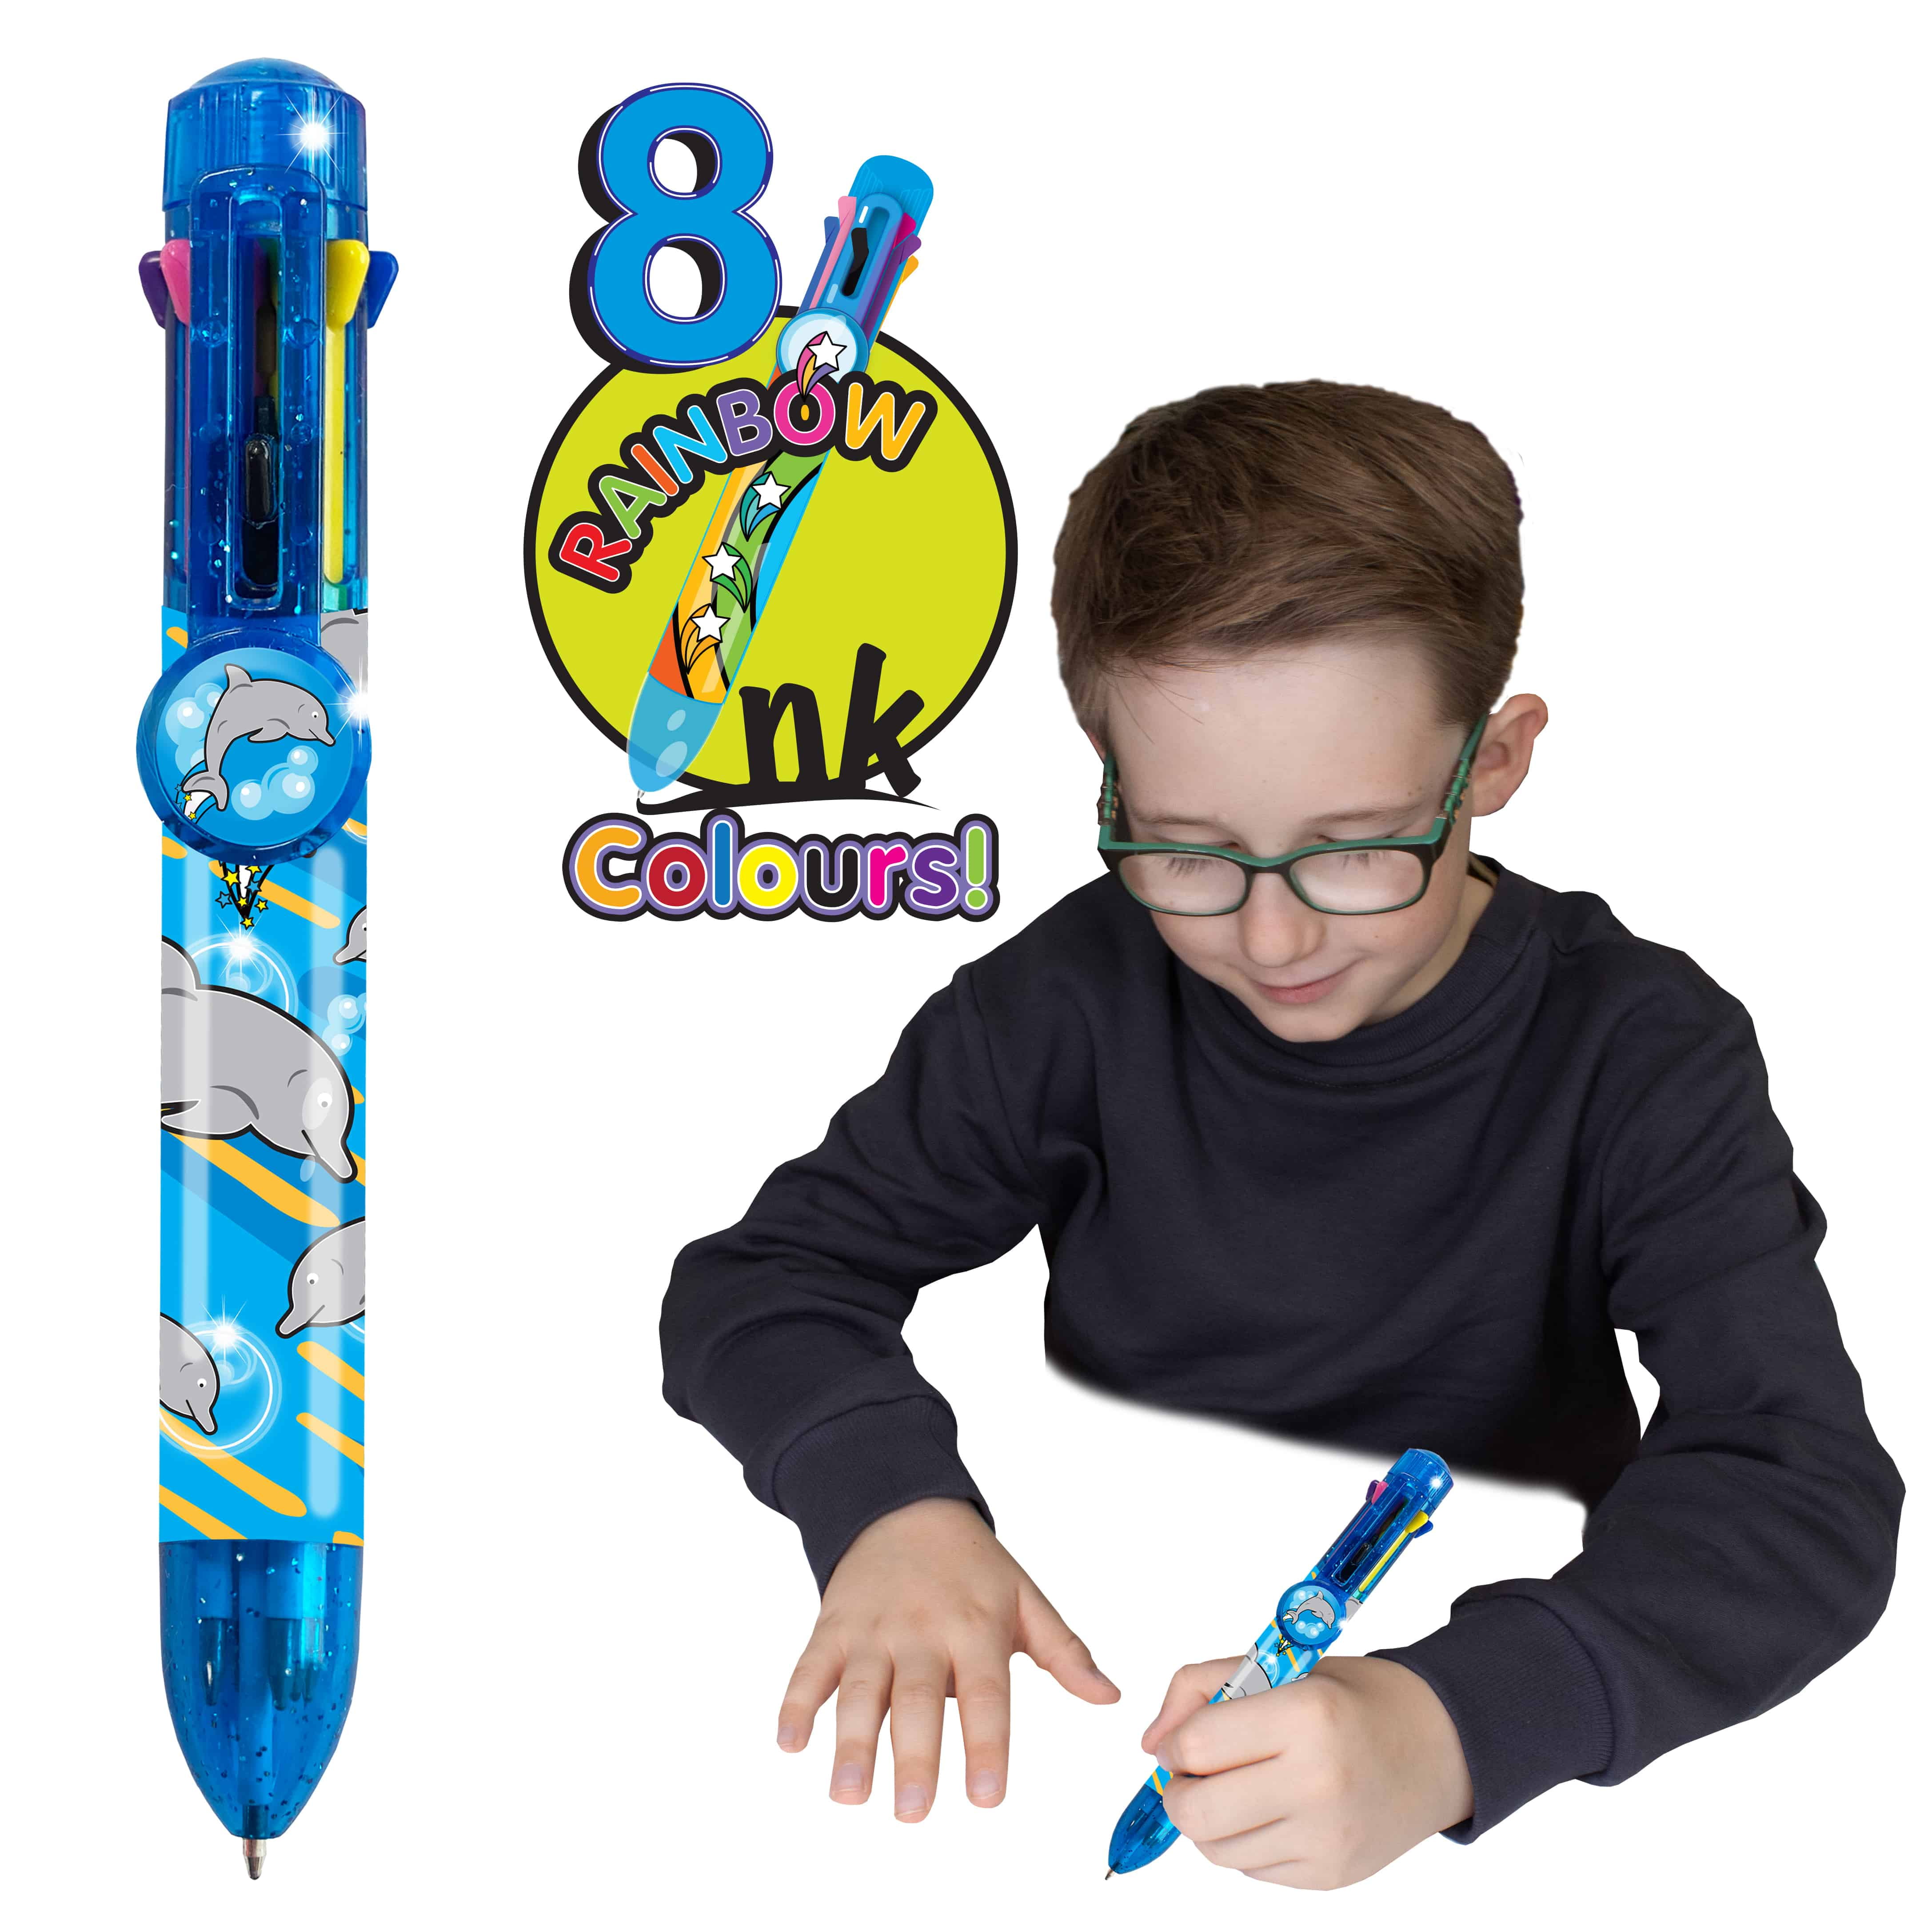 Abgream Pack of 24 Mermaid Pens - Creative Liquid Gel Ink Rollerball Pen for School Home Office Stationery Store Kids Girls W